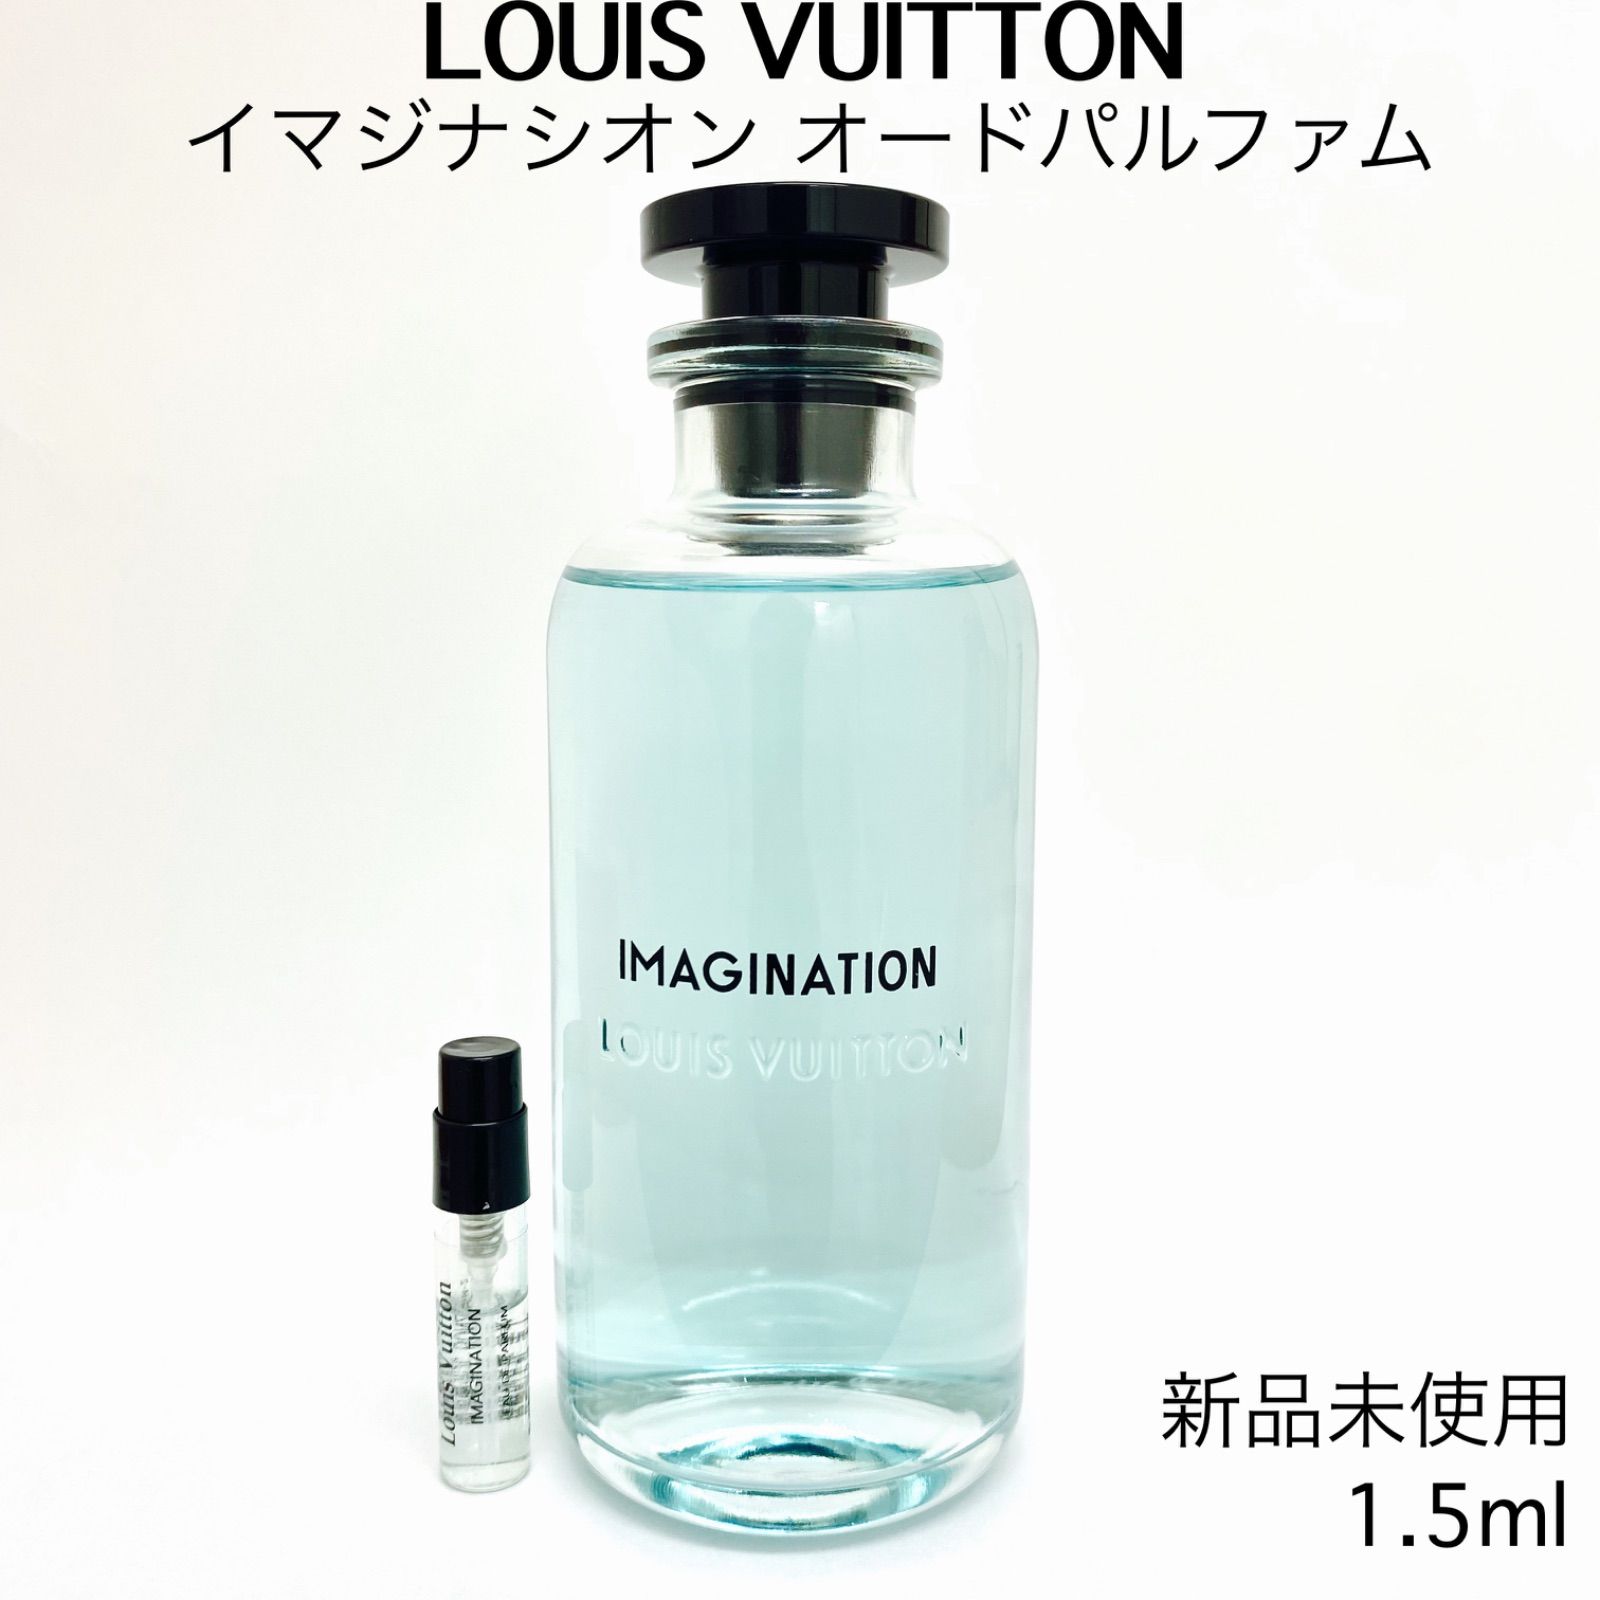 LOUIS VUITTON IMAGINATION, AN INTRIGUING CONCOTION, UNBOXING & REVIEW 